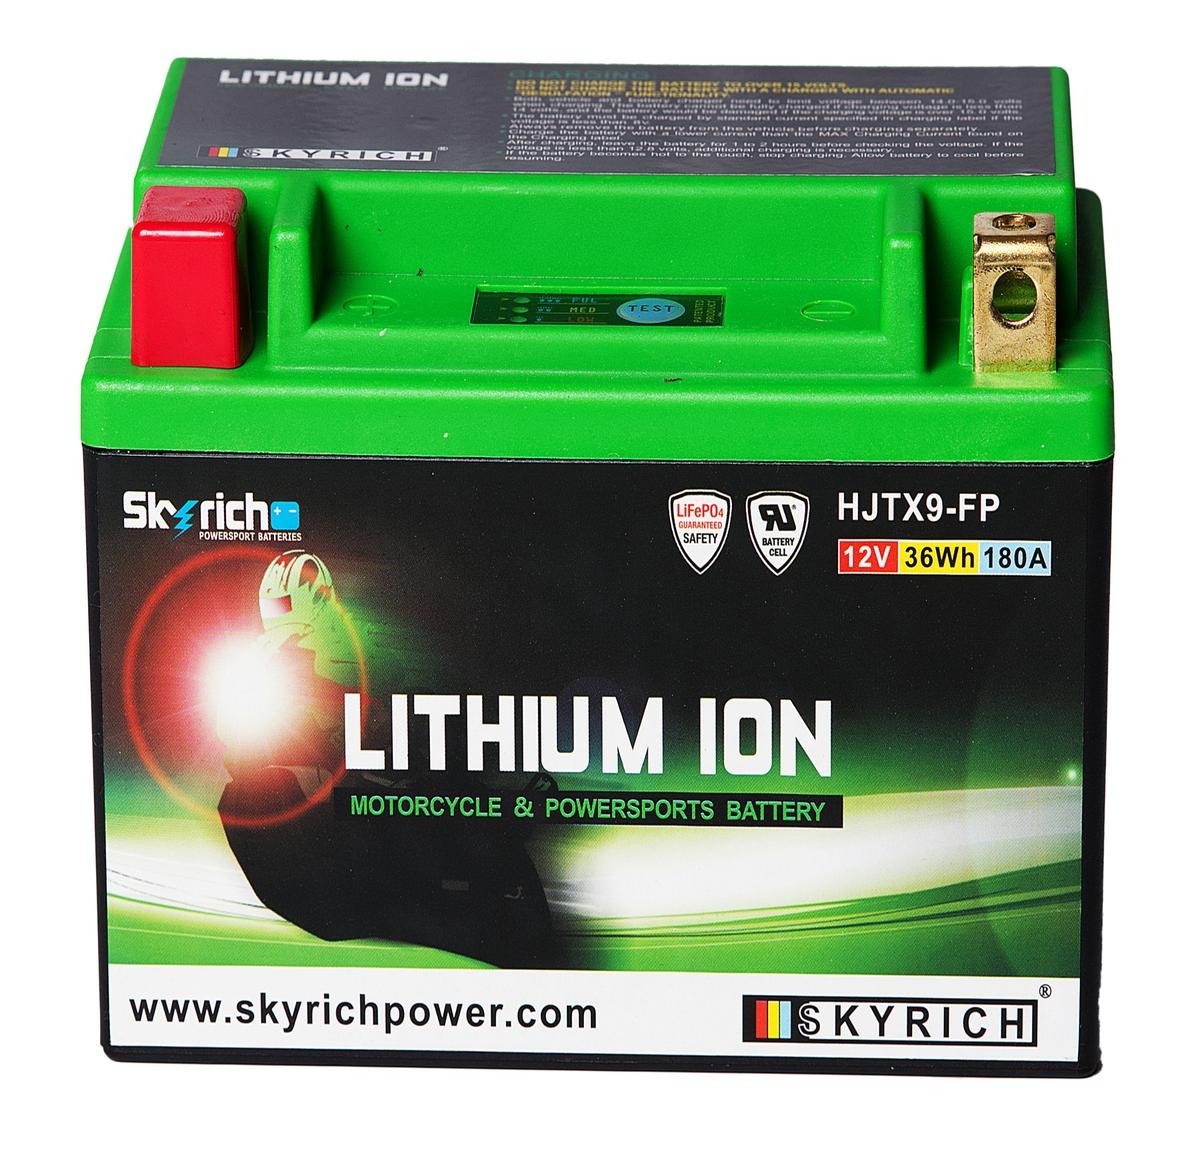 MBK KILIBRE Batterie 12V 3Ah 180A N Li-Ionen-Batterie SKYRICH LITHIUM ION HJTX9-FP